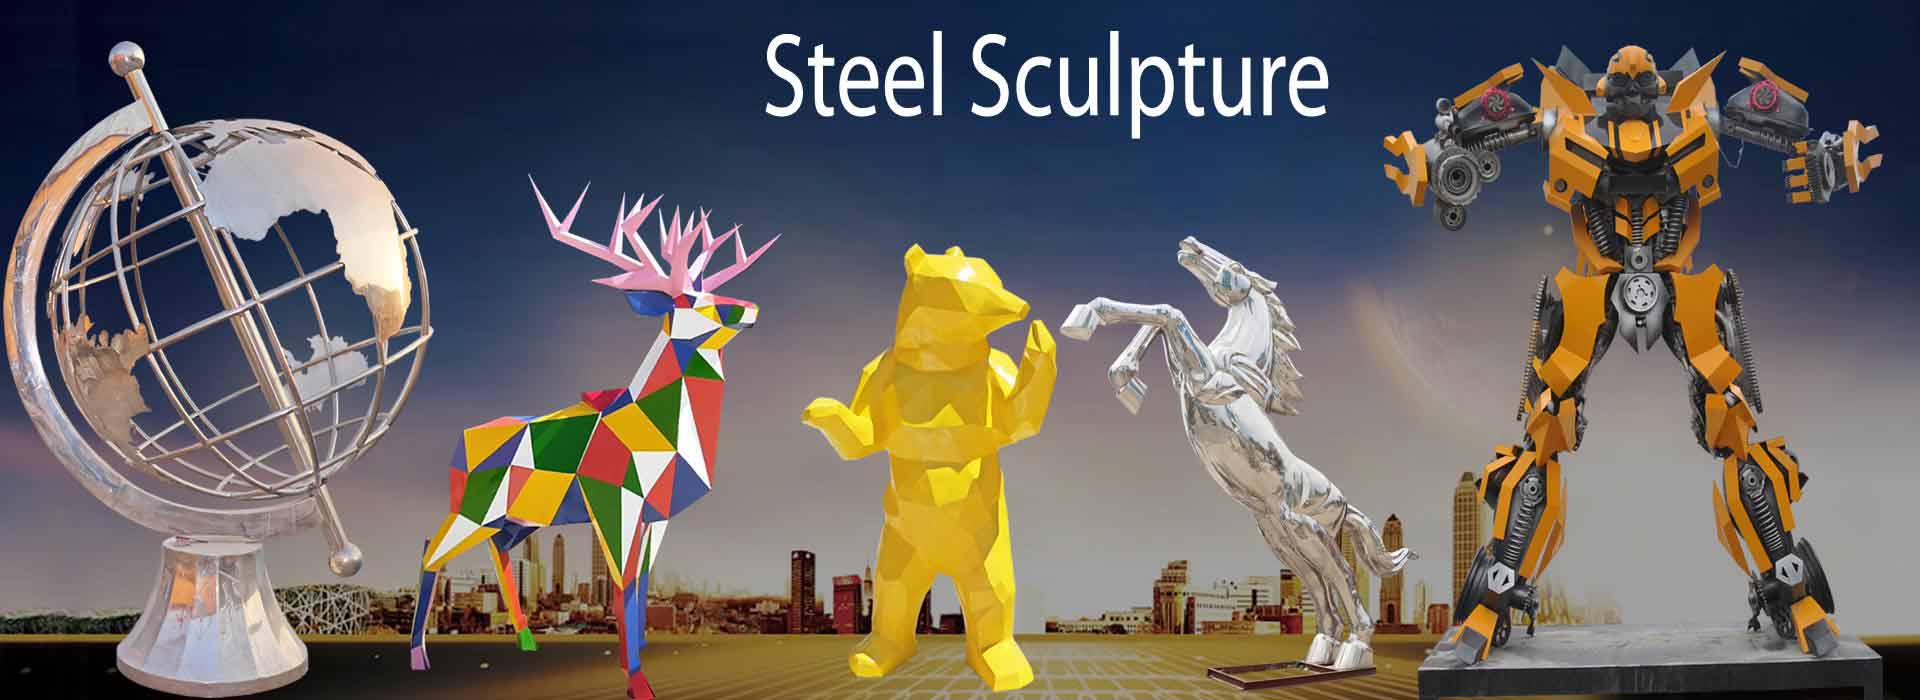 stainless steel statue sculpture